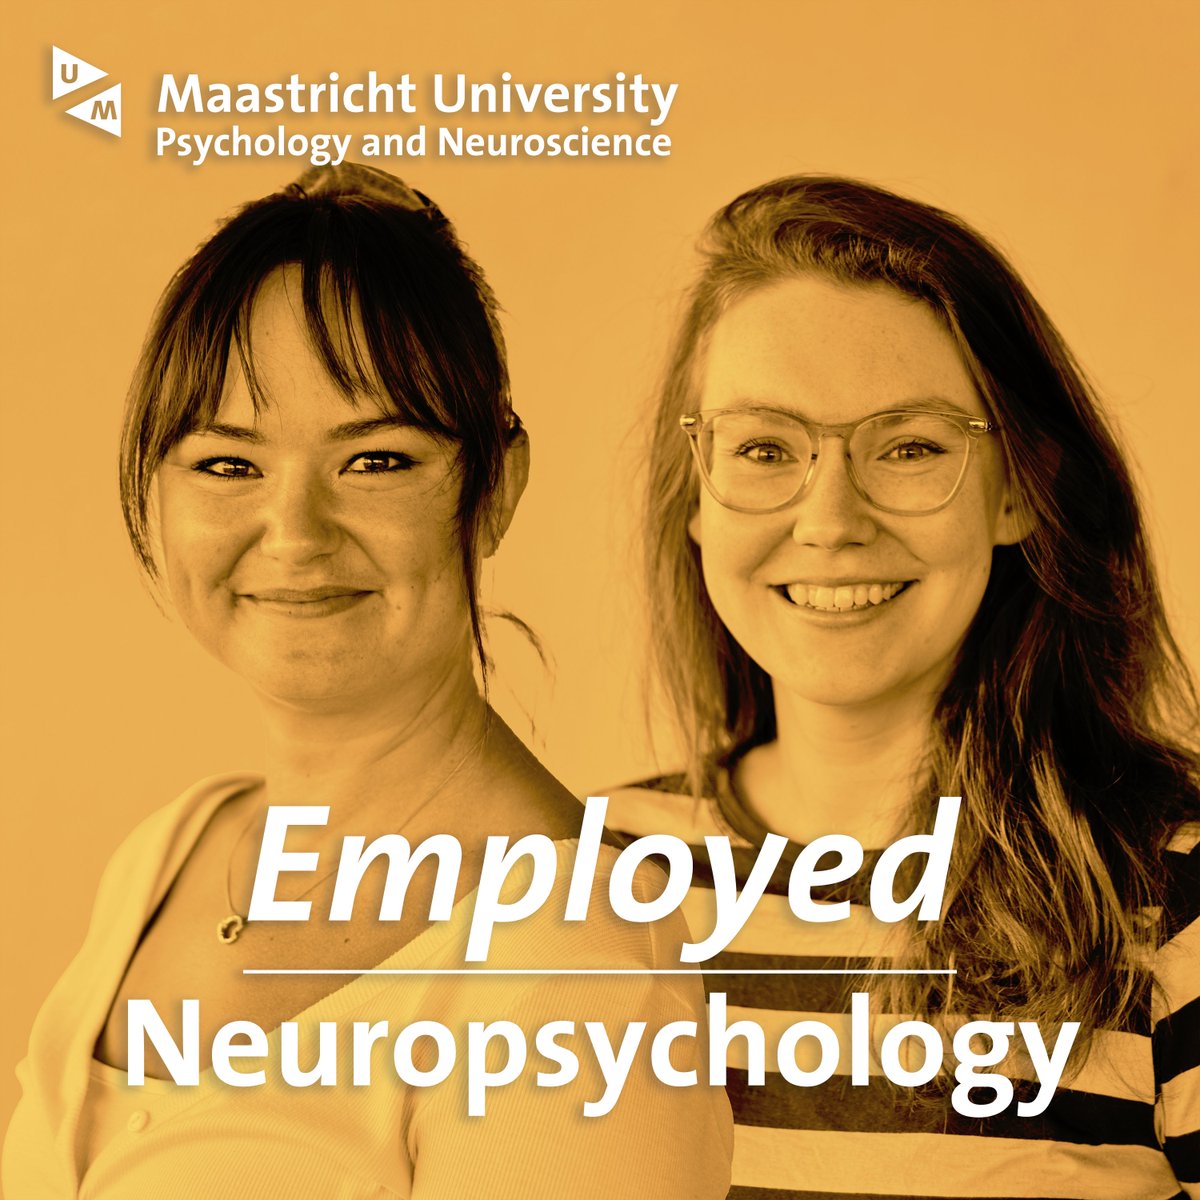 tr.ee/9GEzp6fgG9 NEW EMPLOYED EPISODE! This week: master Psychology - Neuropsychology